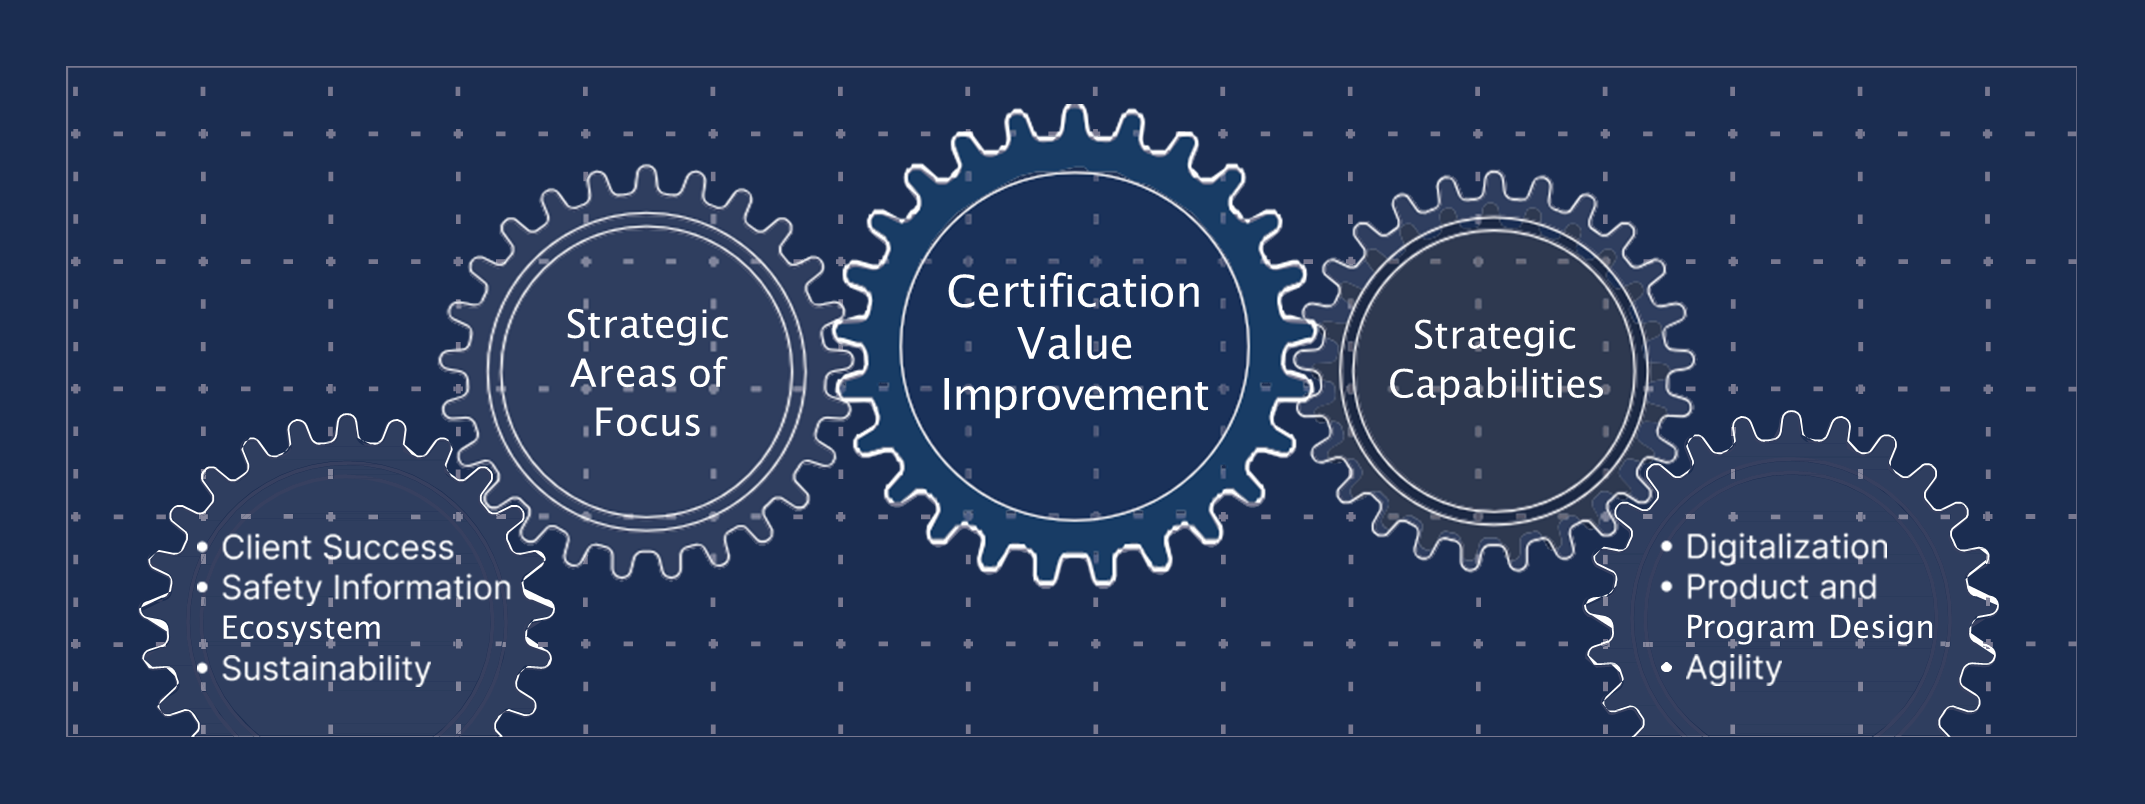 certification-value-improvement.png